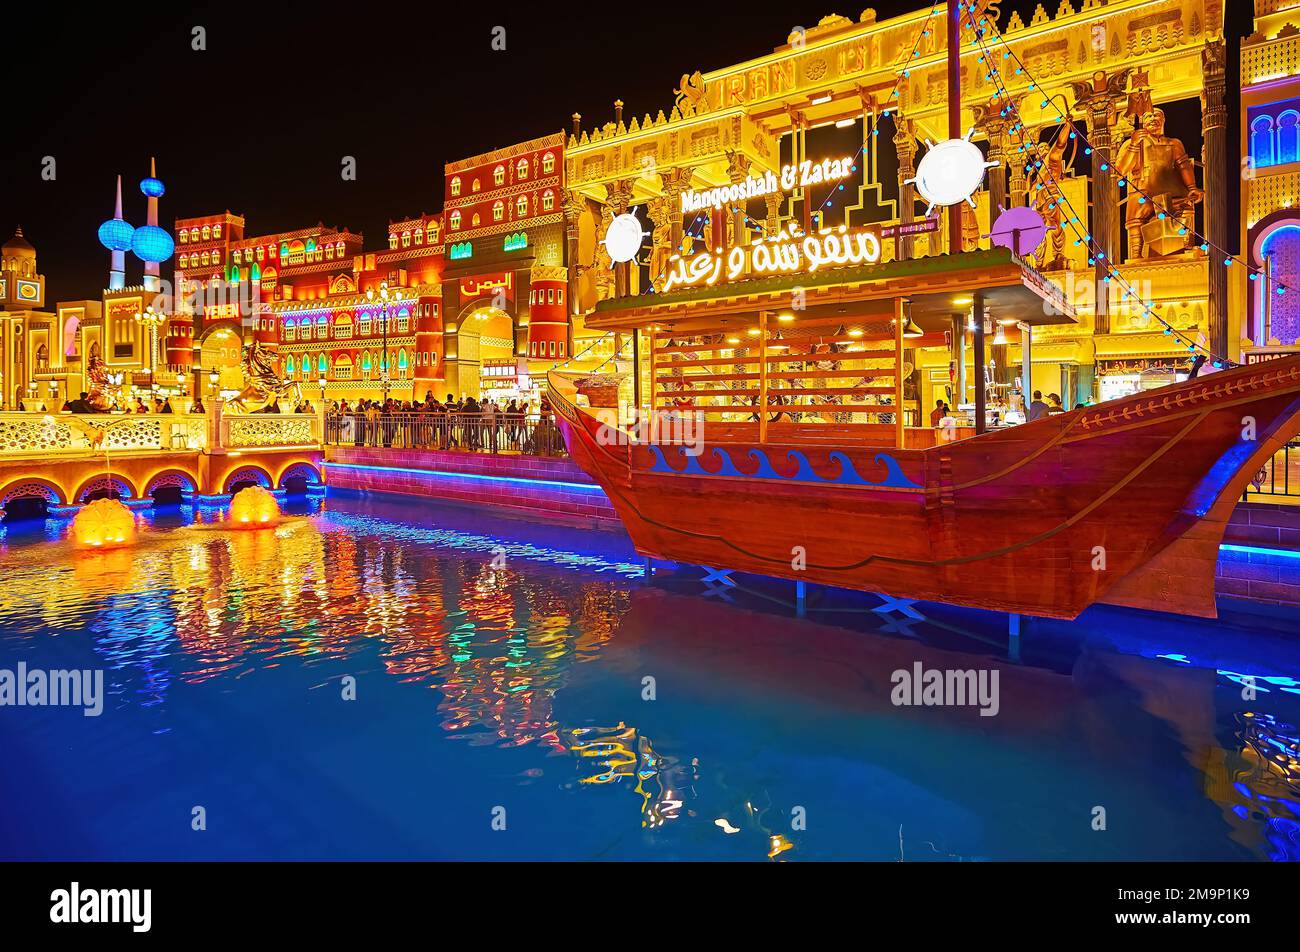 DUBAI, UAE - MARCH 6, 2020: The brightly illuminated trade pavilions of Iran, Yemen, Kuwait of Global Village Dubai behind the canal with decorative w Stock Photo